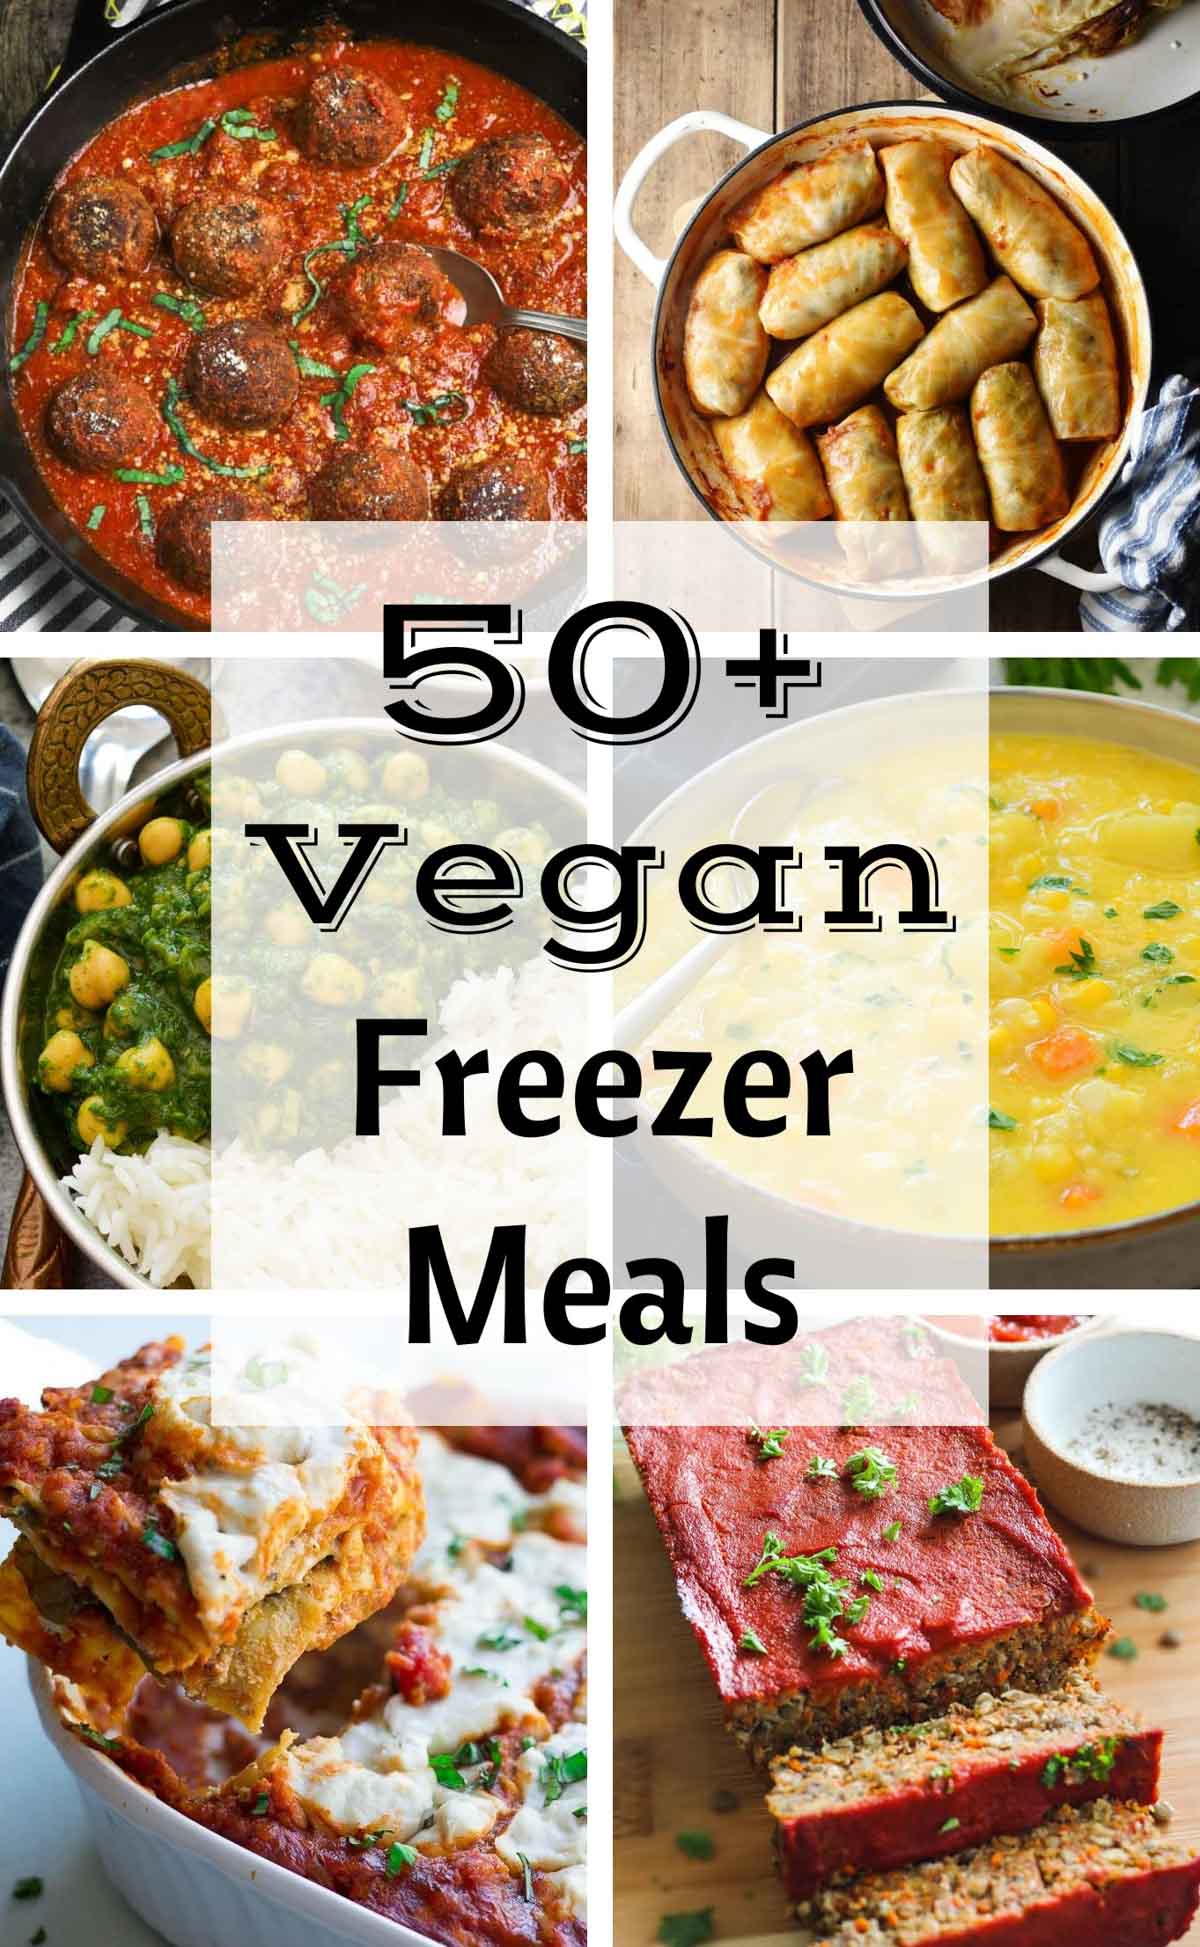 50+ Vegan Freezer Meals - The Stingy Vegan